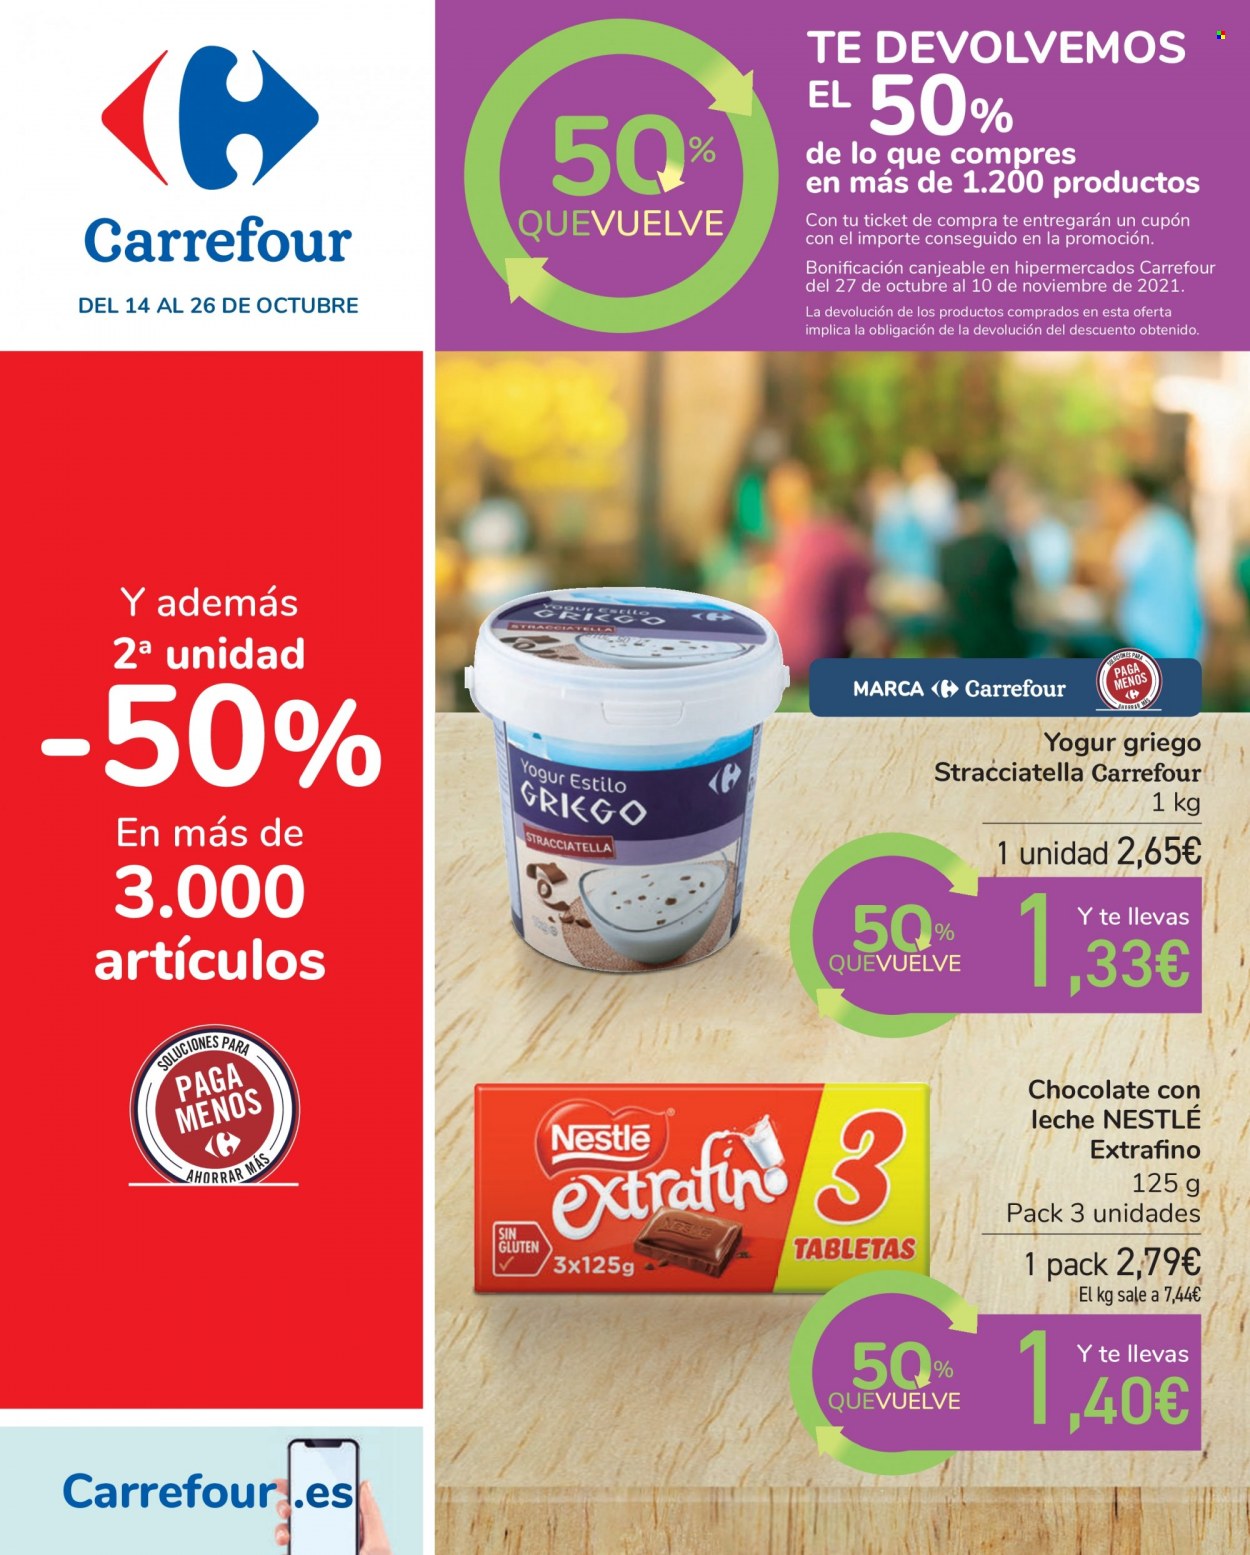 thumbnail - Folleto actual Carrefour - 14/10/21 - 26/10/21 - Ventas - yogúr griego, Nestlé. Página 1.